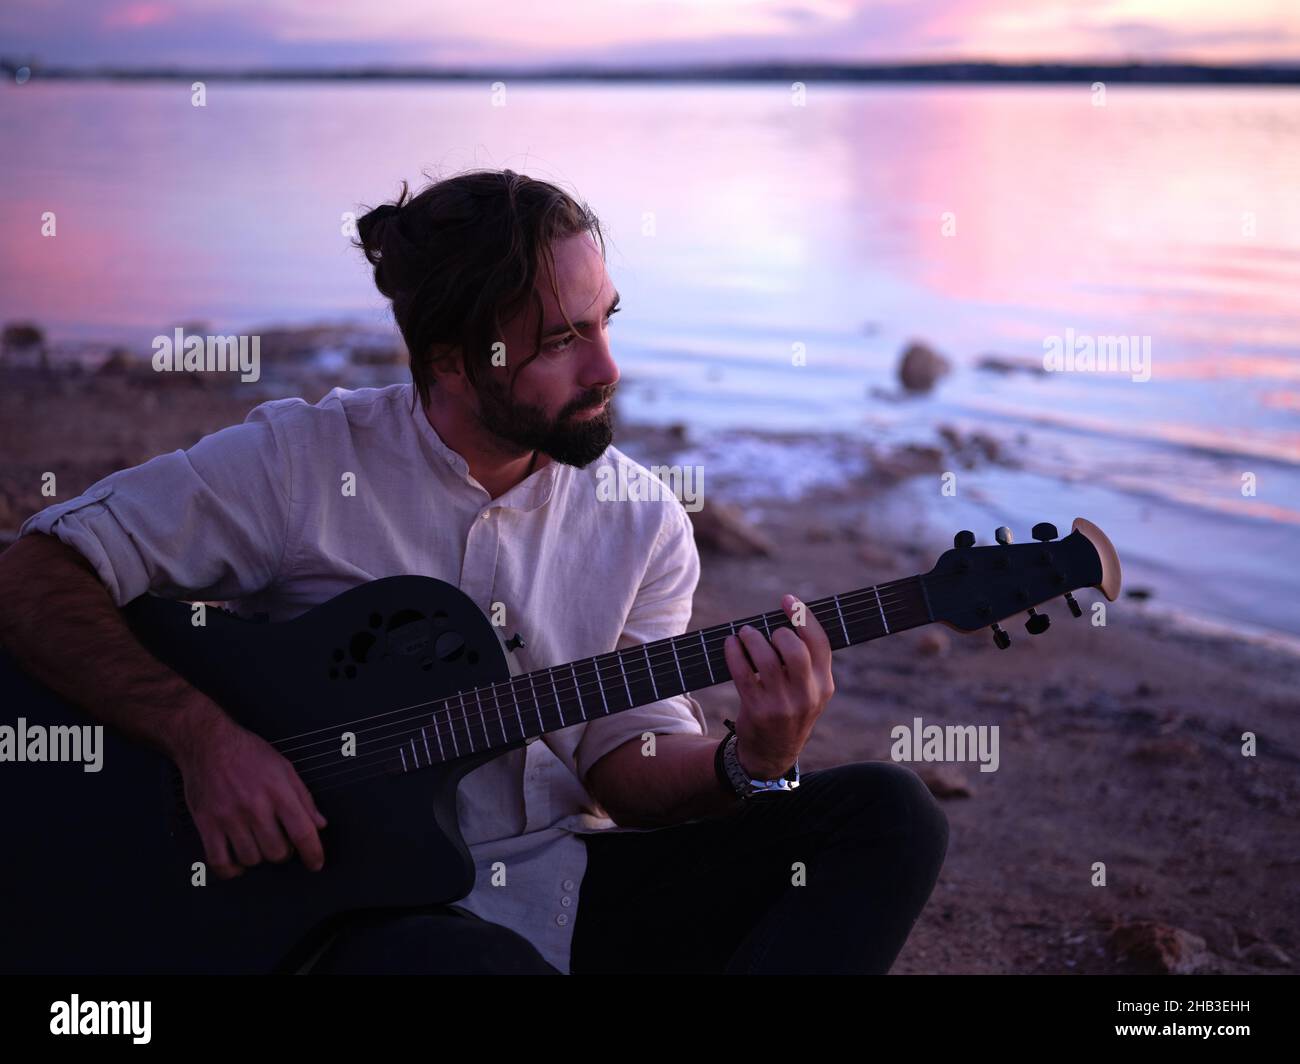 guitarist sitting by a lake reflecting the pink sunset light Stock Photo